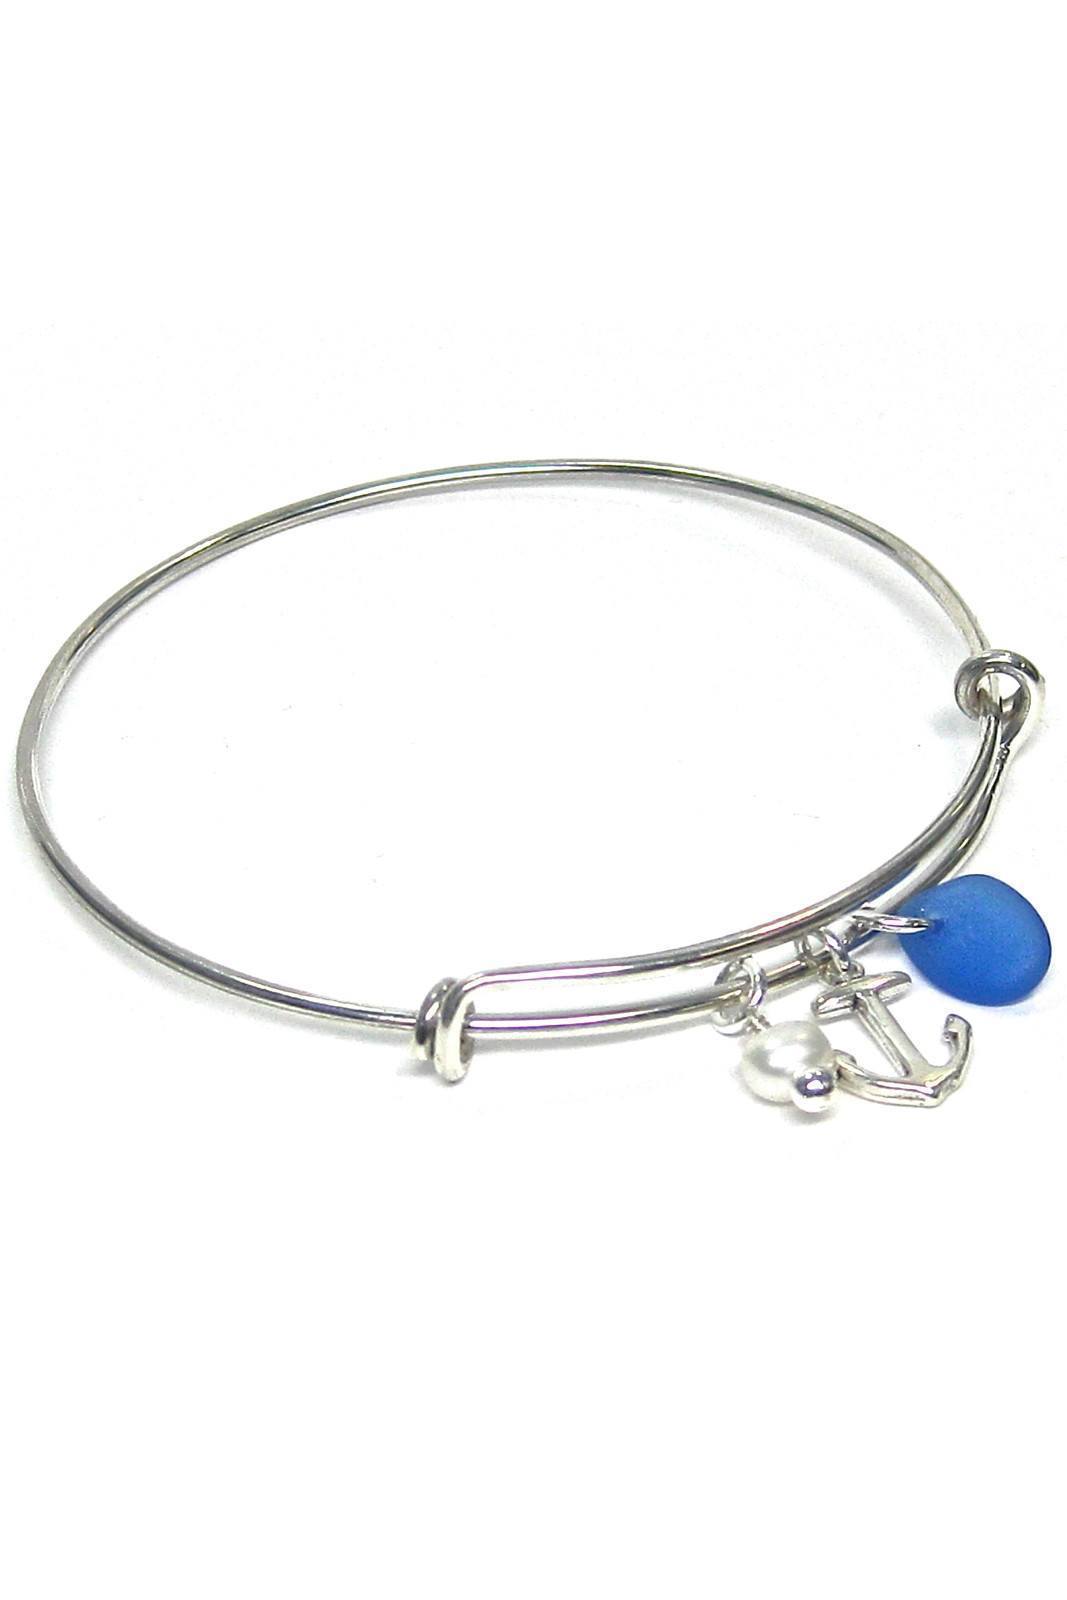 Sea Glass Jewelry, Adjustable Bracelet Bangle Charms